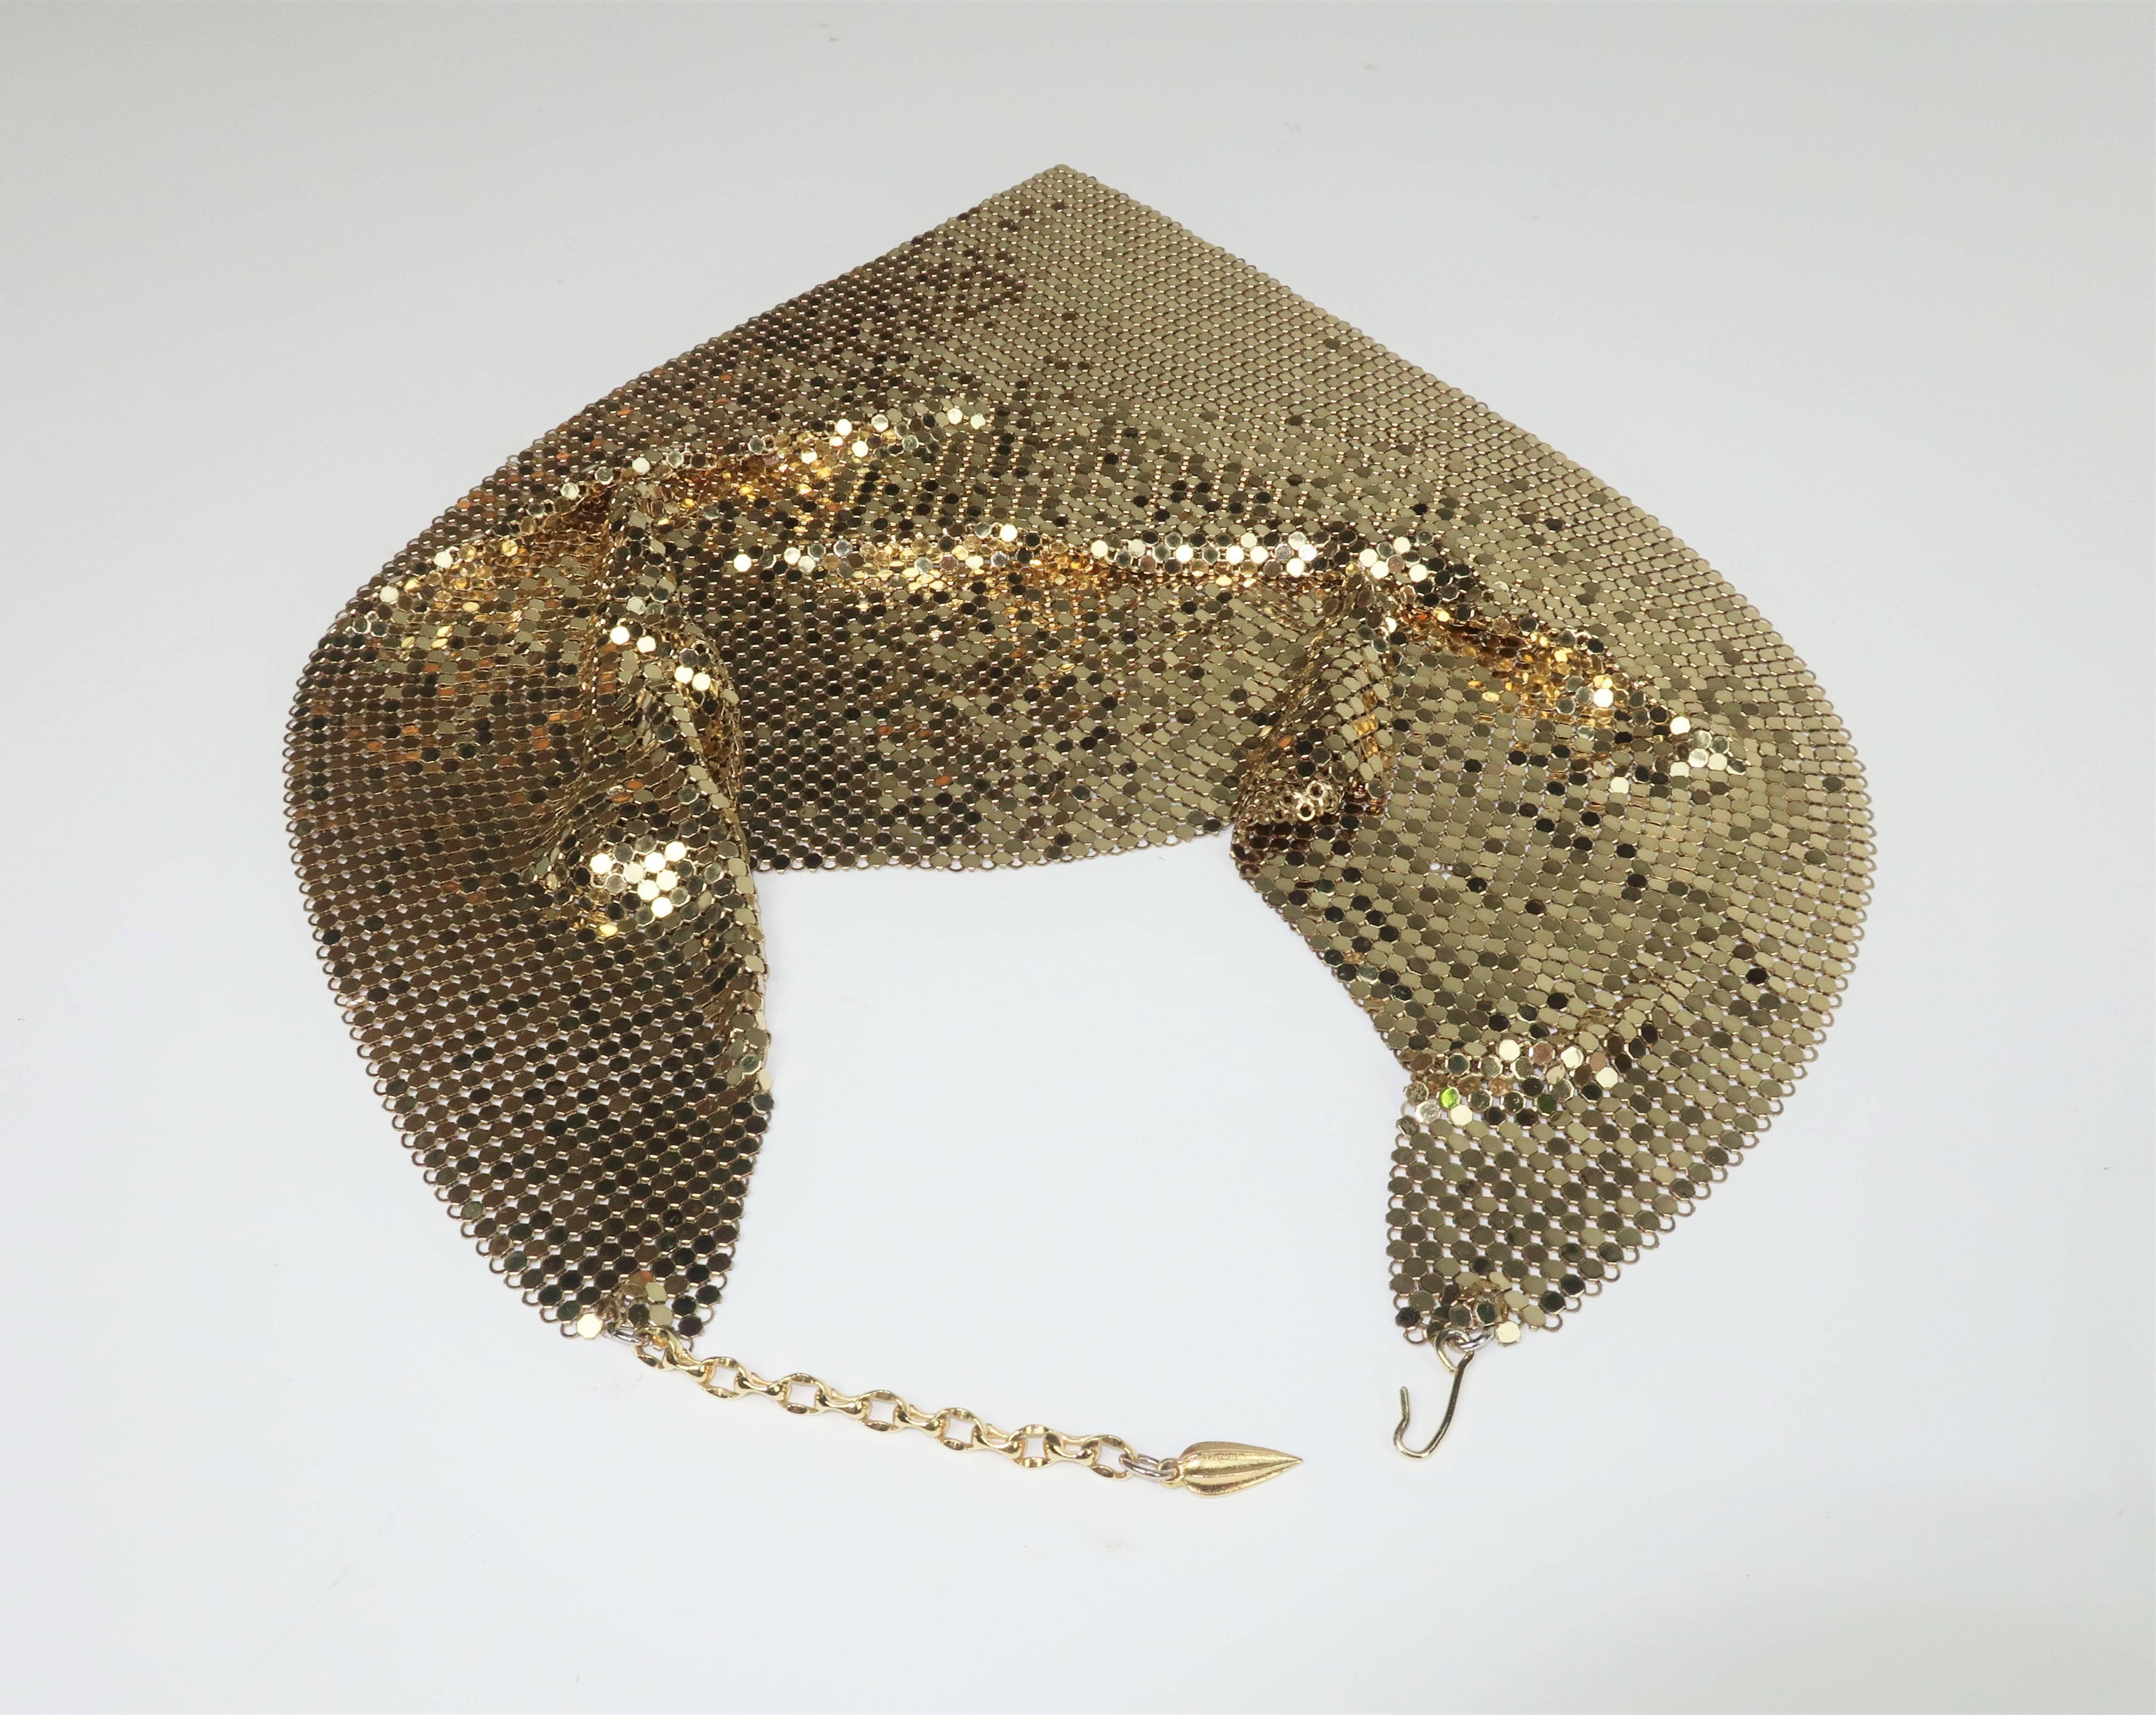 Art Deco Disco Glam 1970's Whiting & Davis Gold Chain Mail Bib Necklace